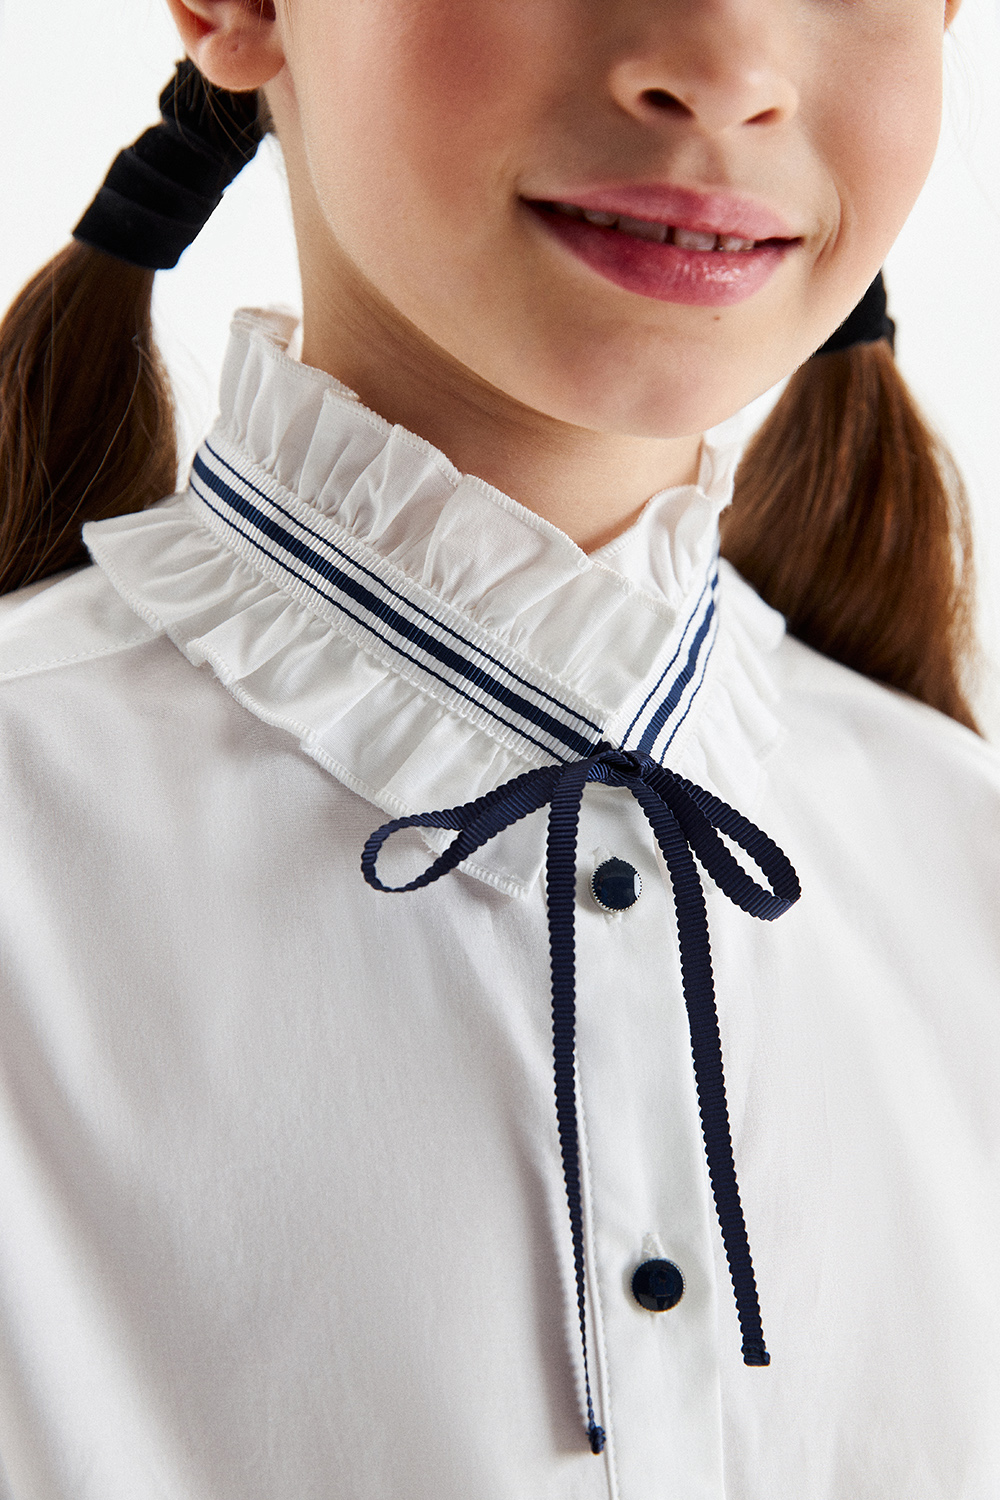 Хлопковая блузка со съемным воротничком (SSFSG-329-23009-201) Silver spoon